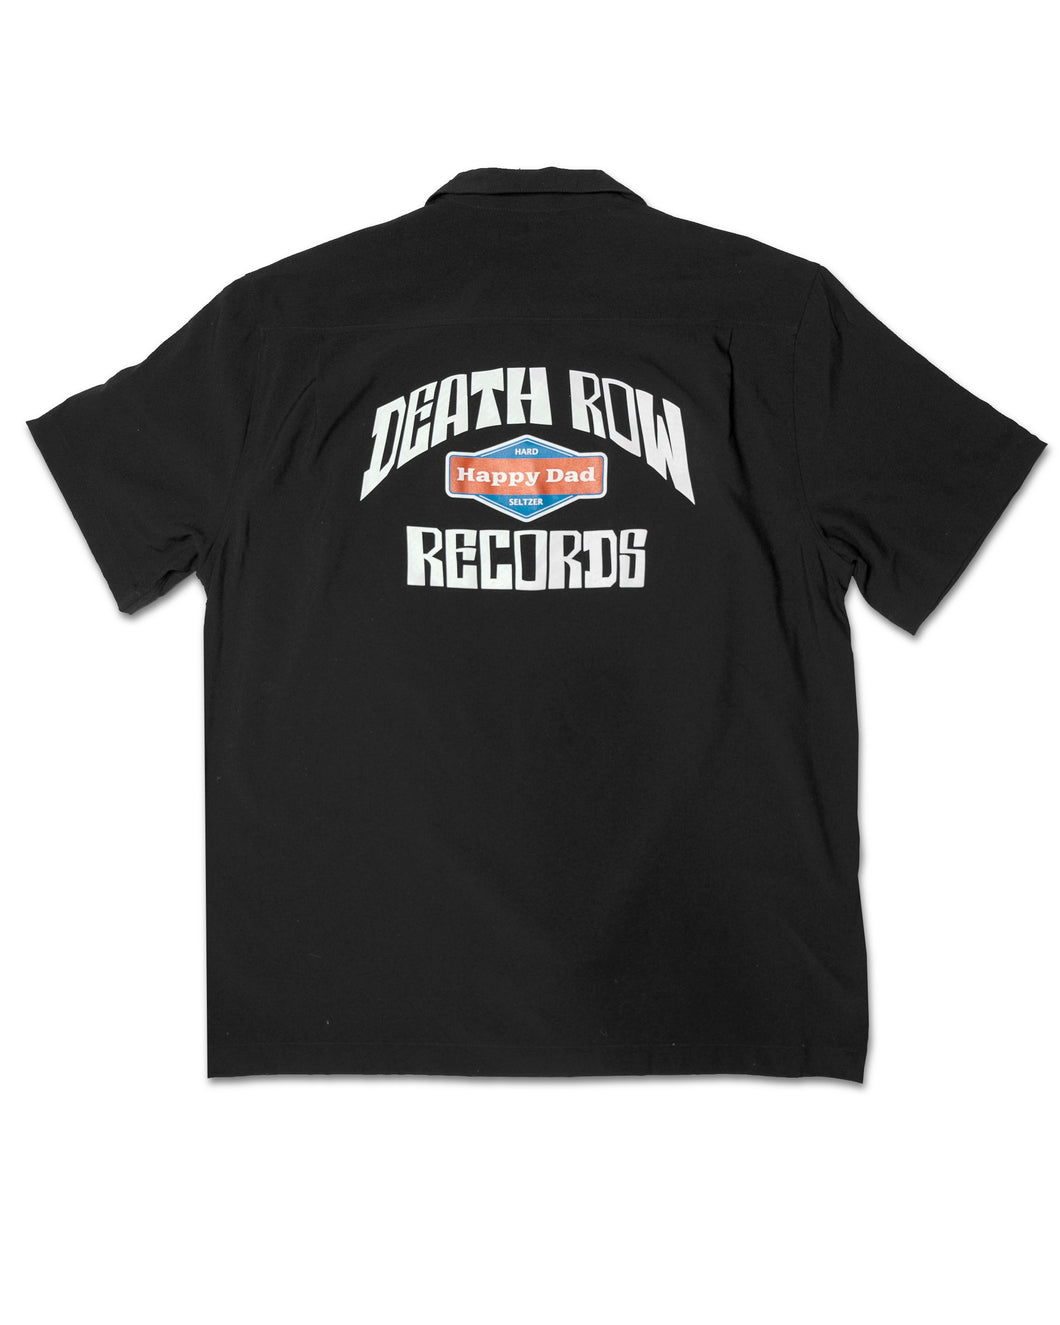 Happy Dad x Death Row Button Up Shirt (Black)